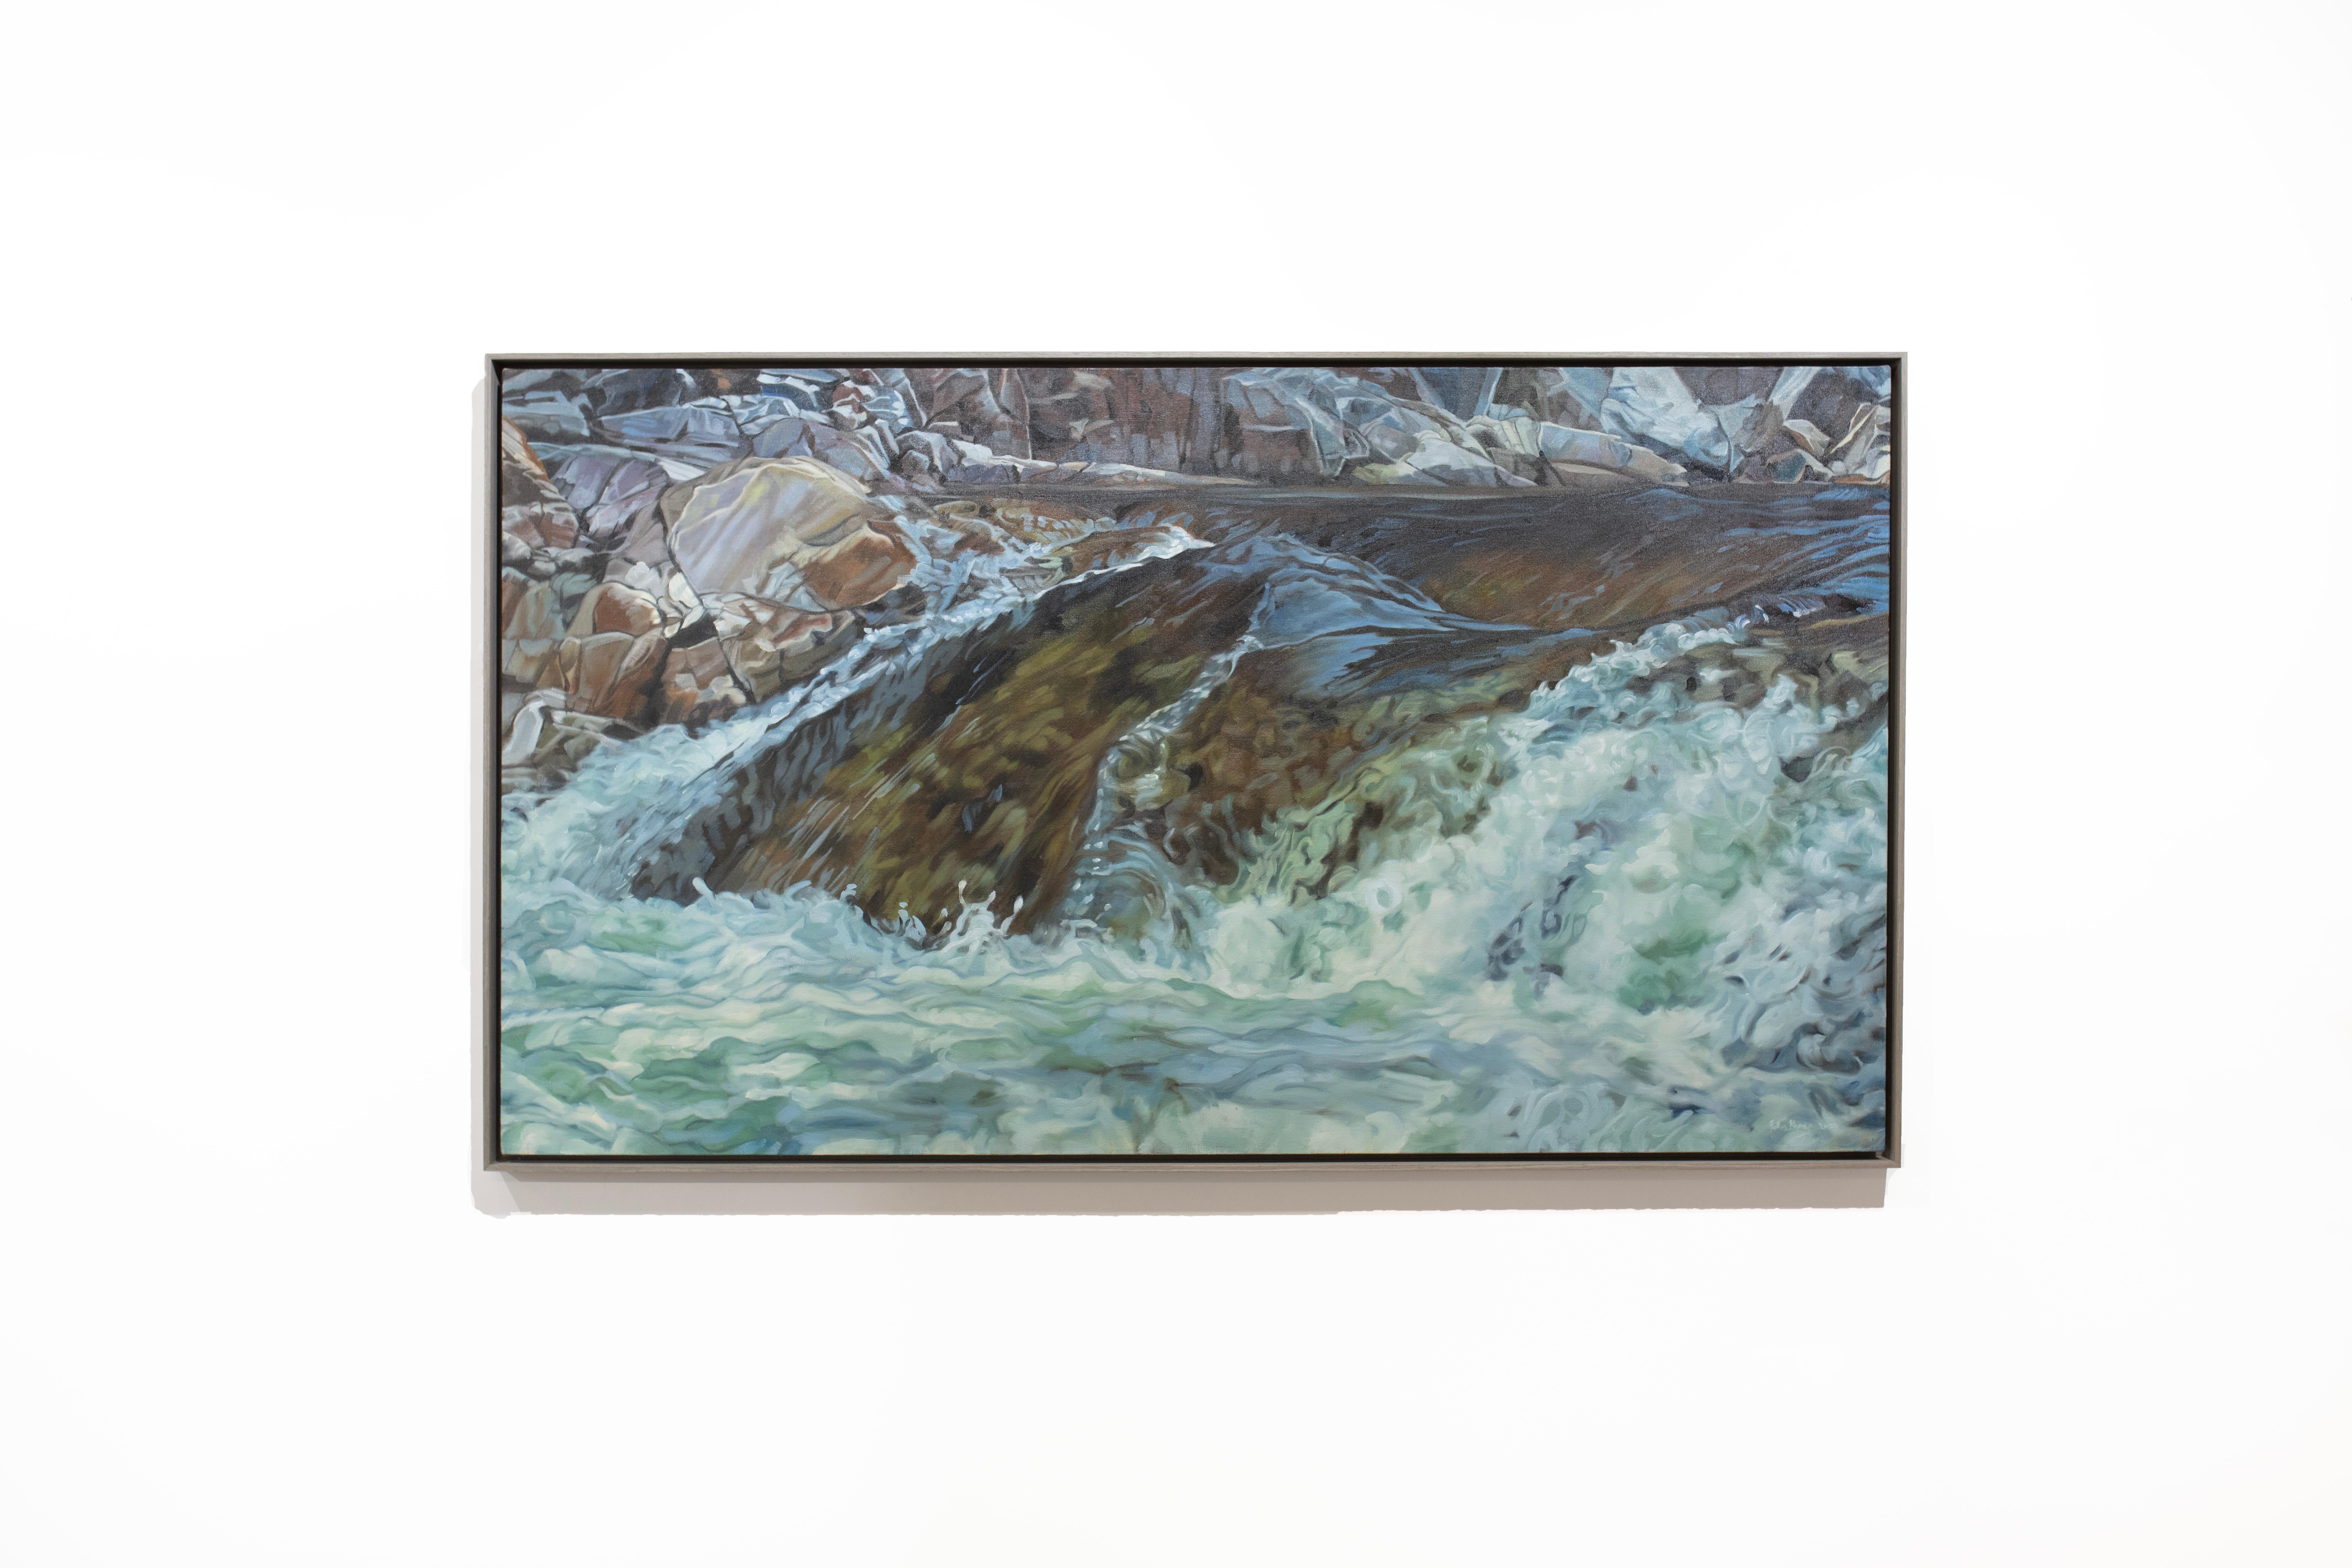 John Harris (painter) Landscape Painting - "Bridge Falls" Naturalistic River Oil Painting